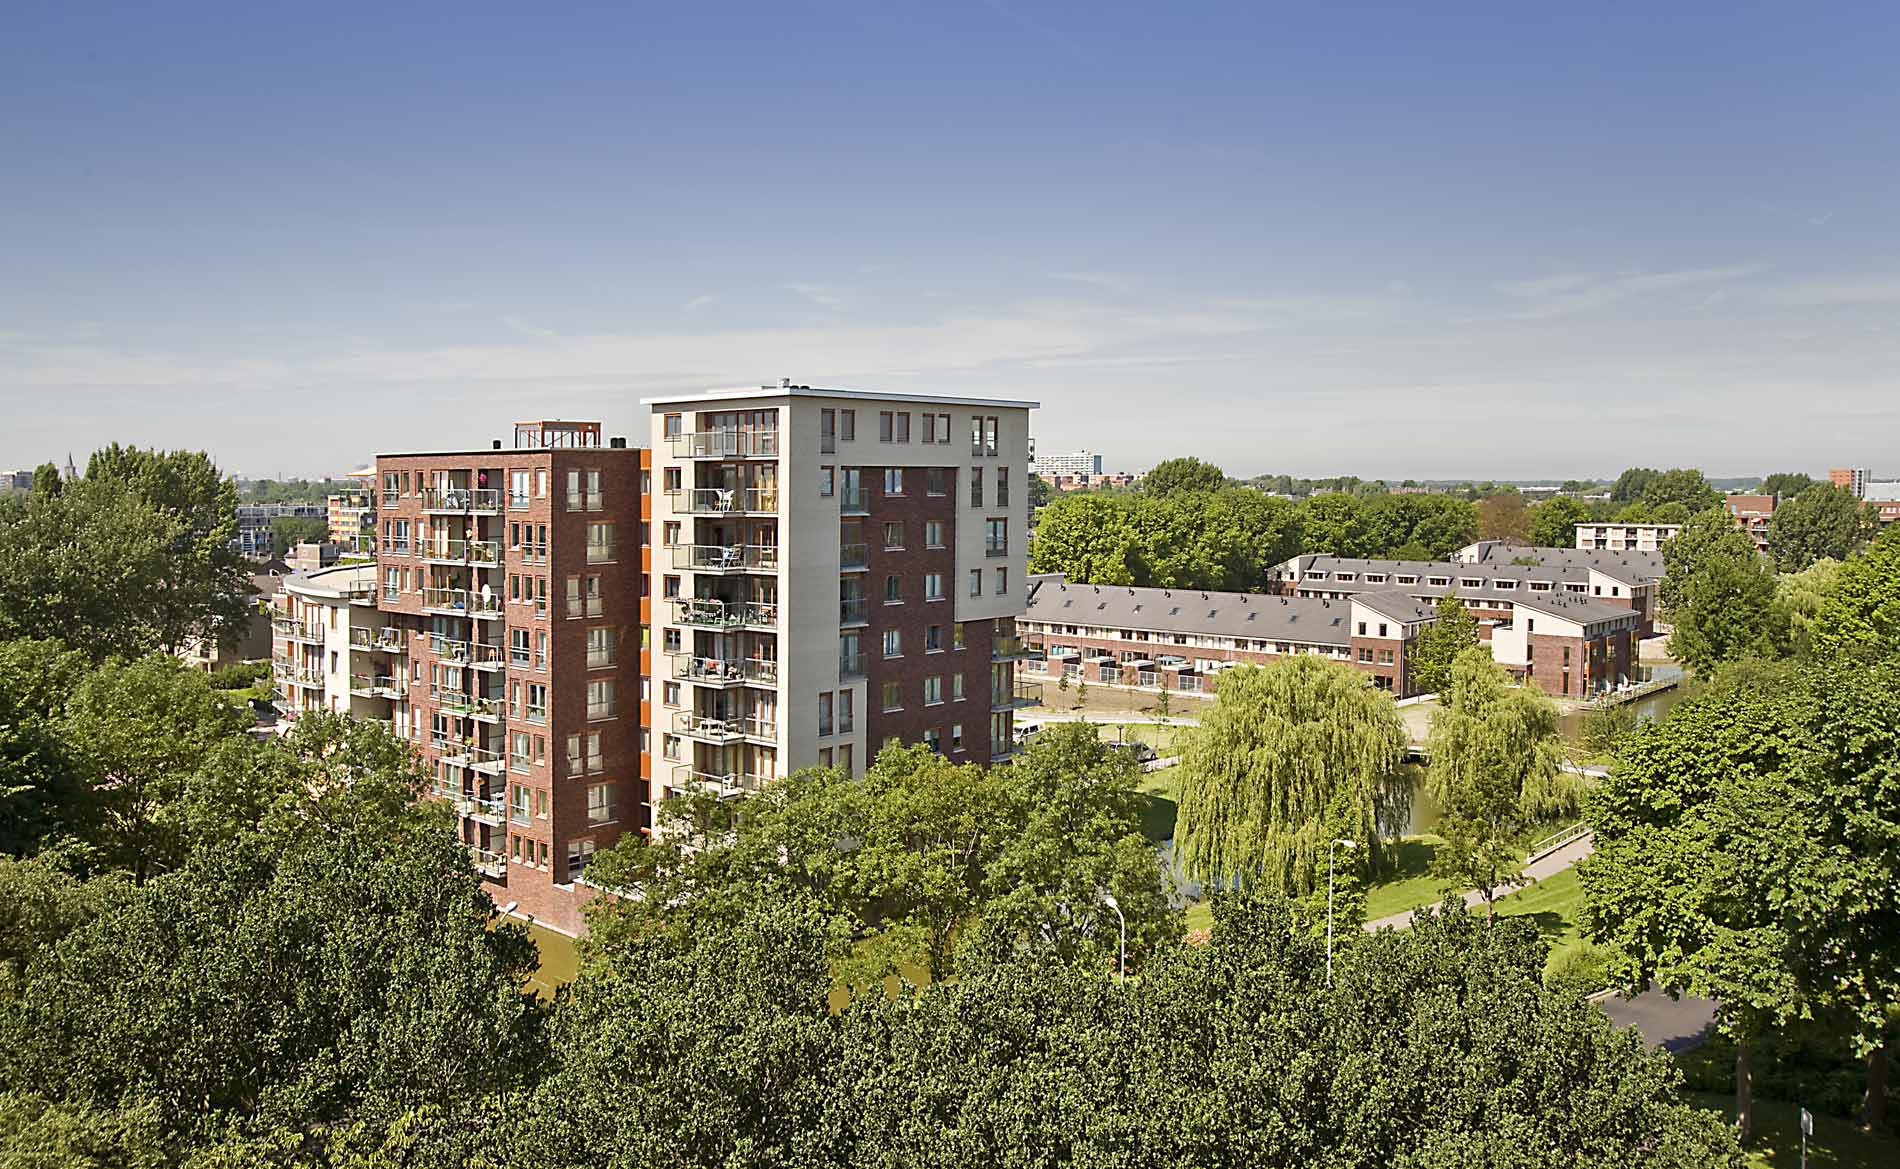 Stadsvernieuwing Heemskerk Waterrijck stedenbouwkundig plan park BBHD architecten